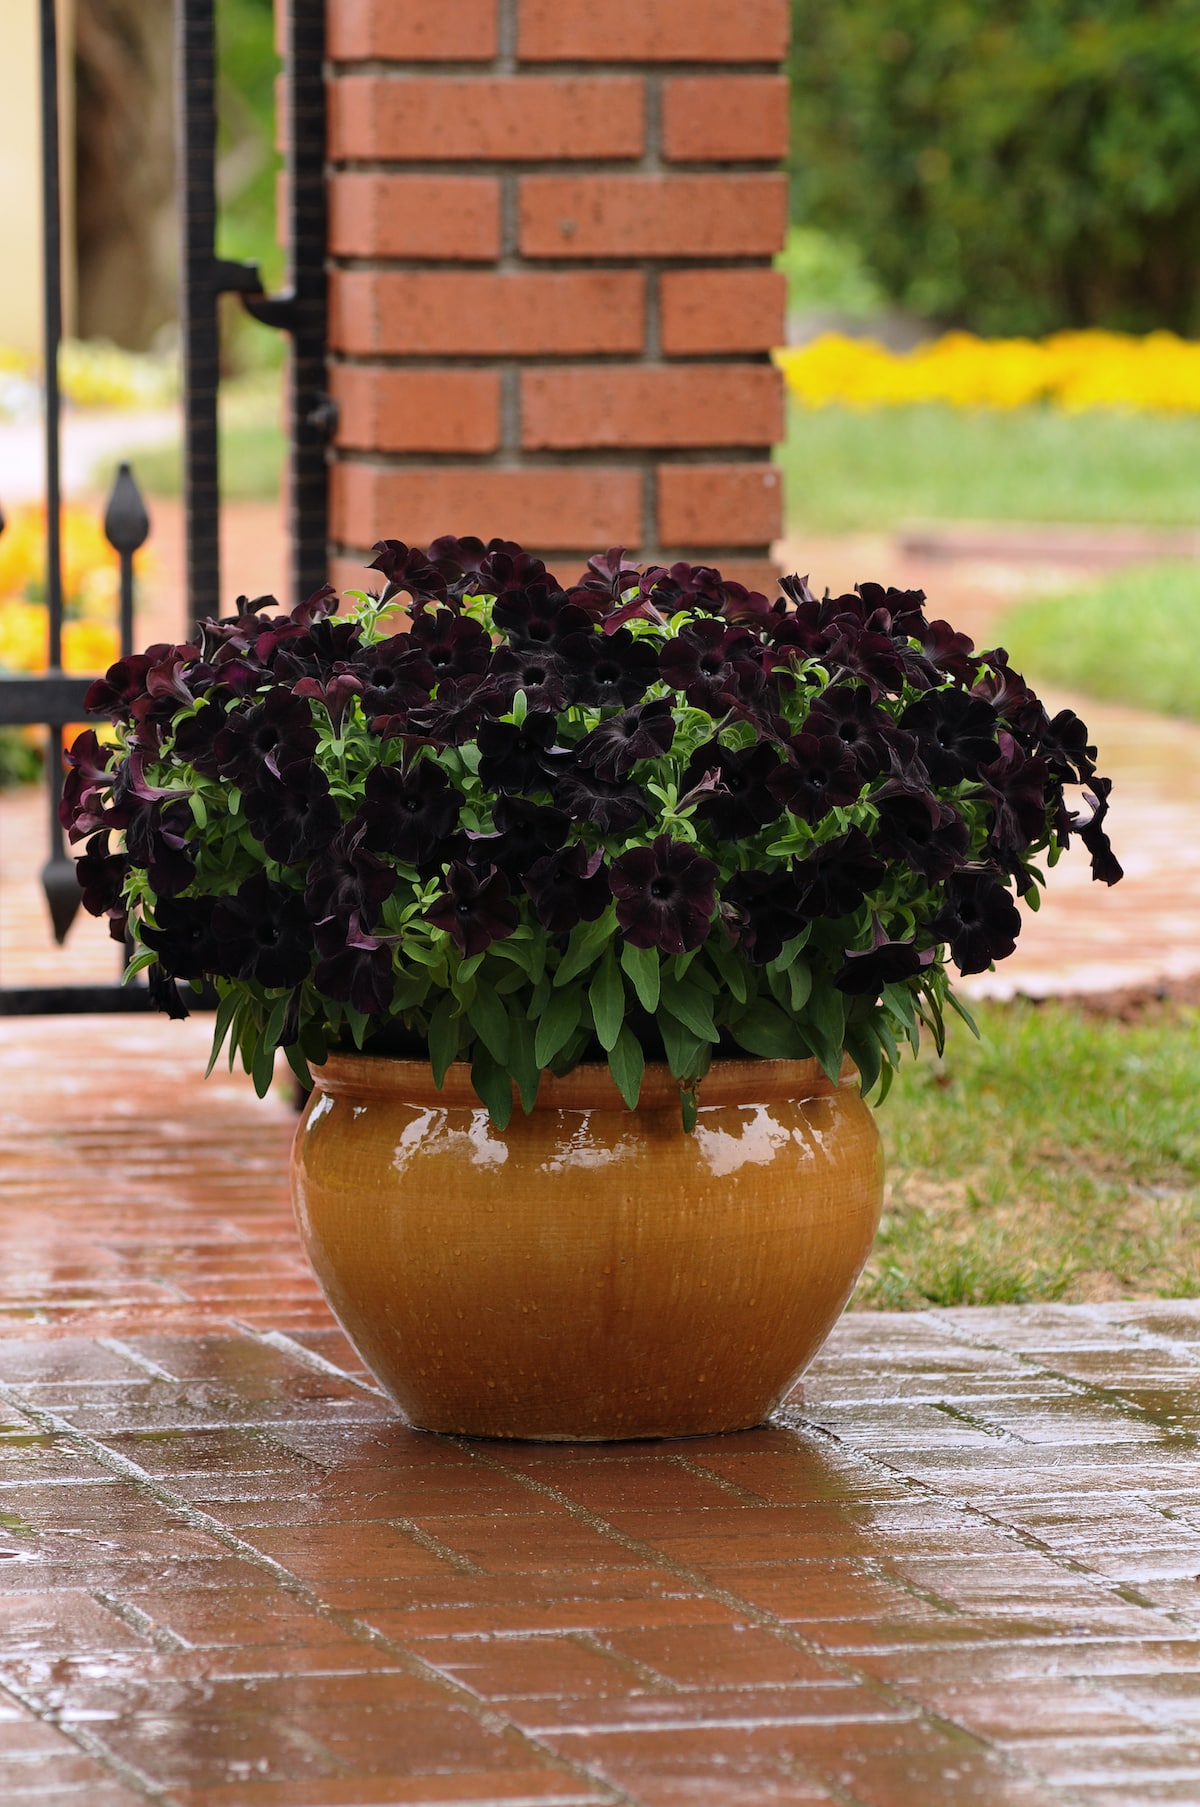 Petunia black magic growing in a clay pot outdoors.